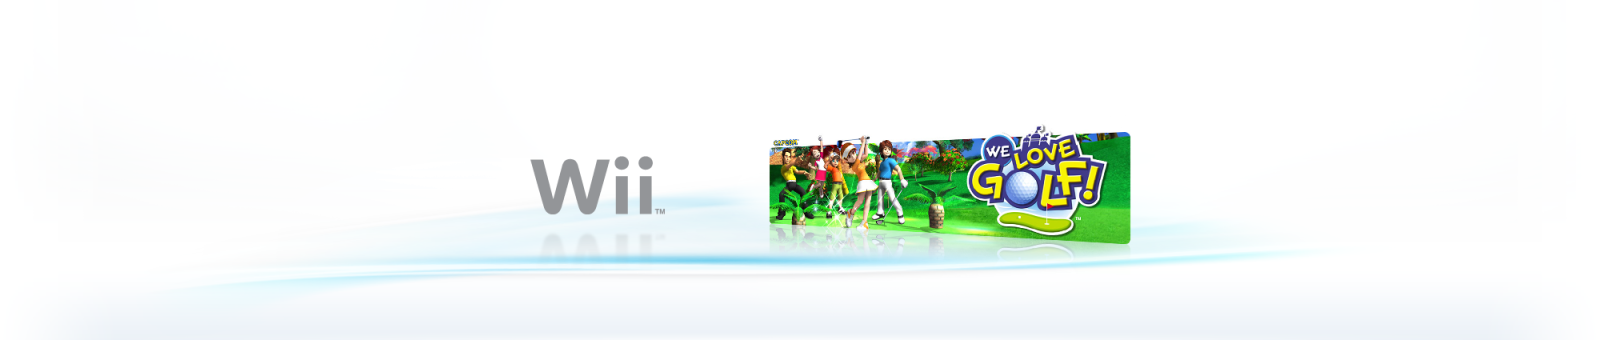 We Love Golf Wii Games Nintendo